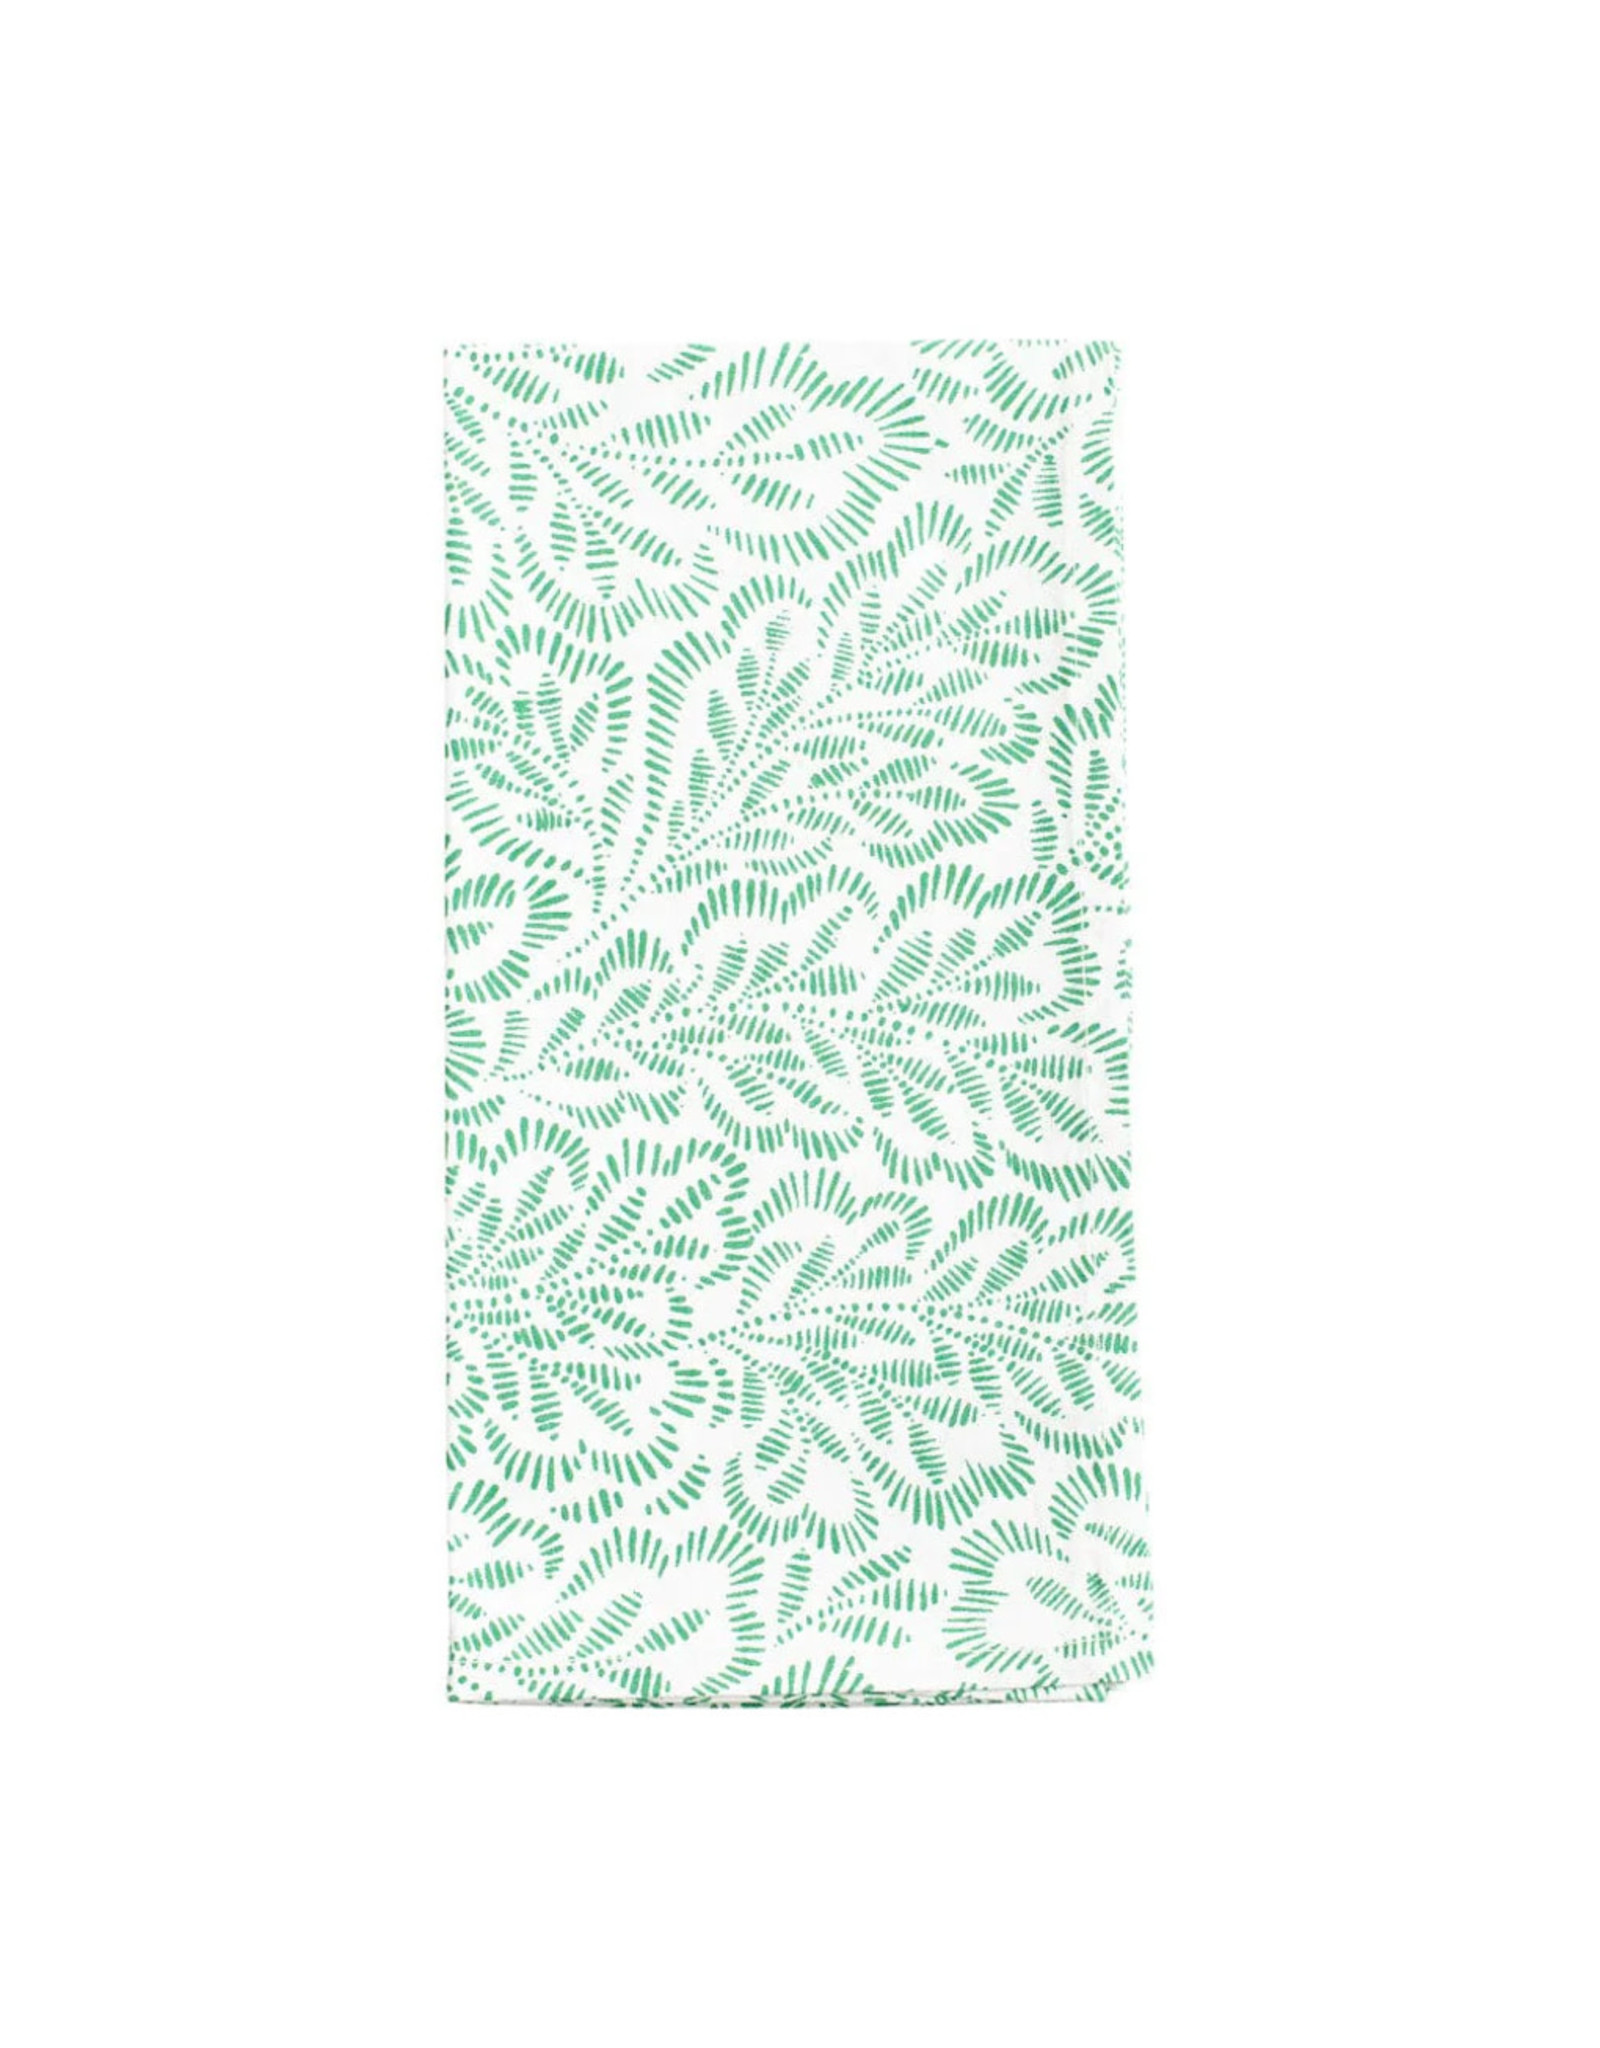 Caspari Cloth Dinner Napkins Set of 4 Block Print Leaves Green White